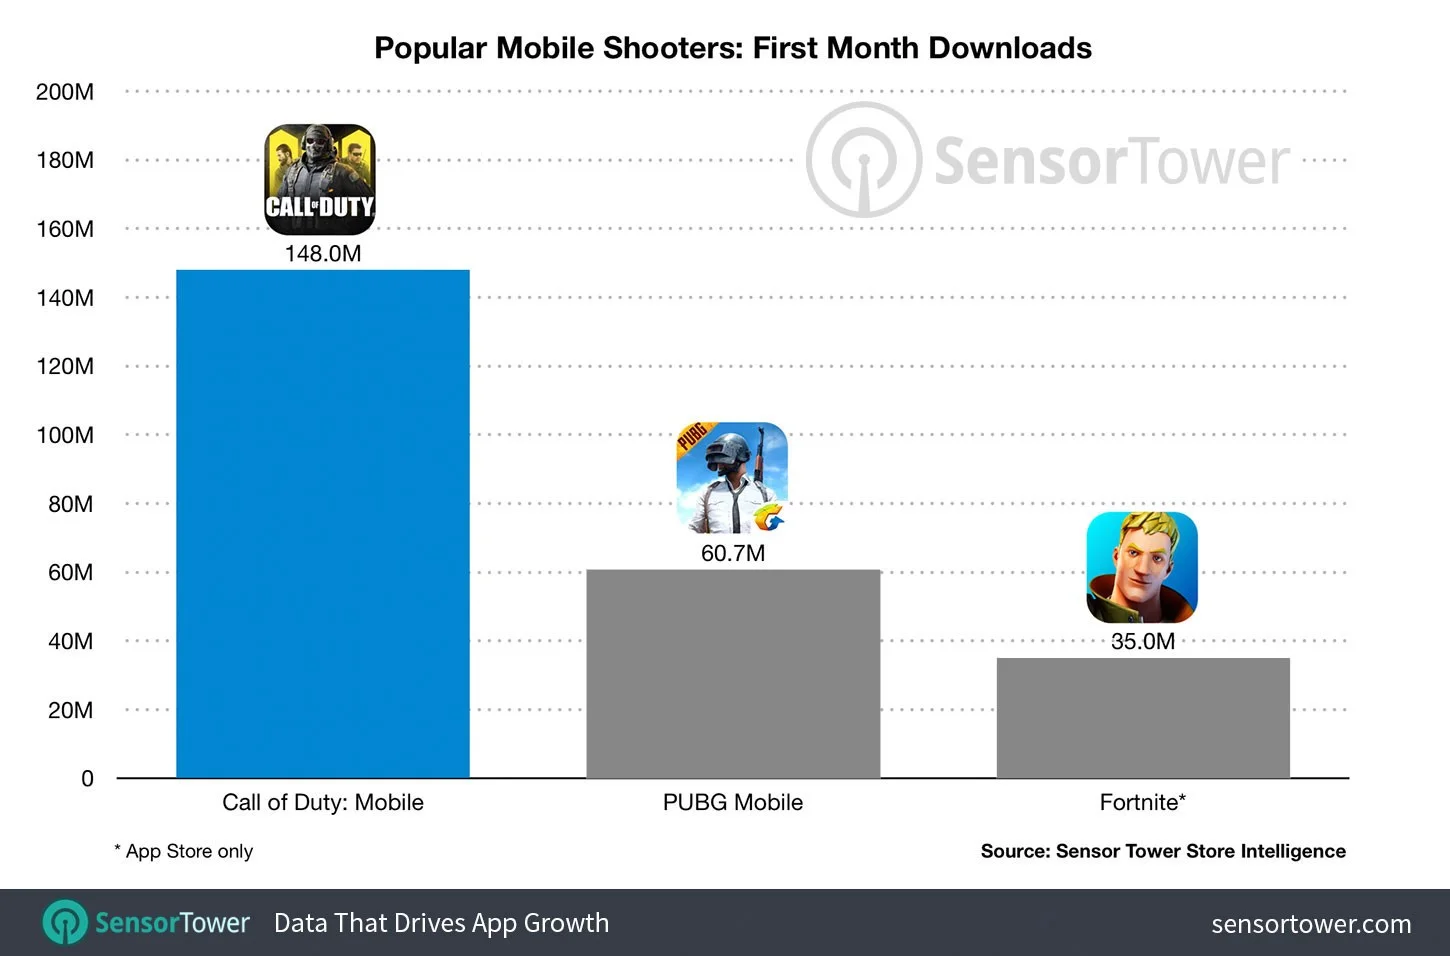 Call of Duty Mobile скачали 148 миллионов раз за первый месяц - фото 1